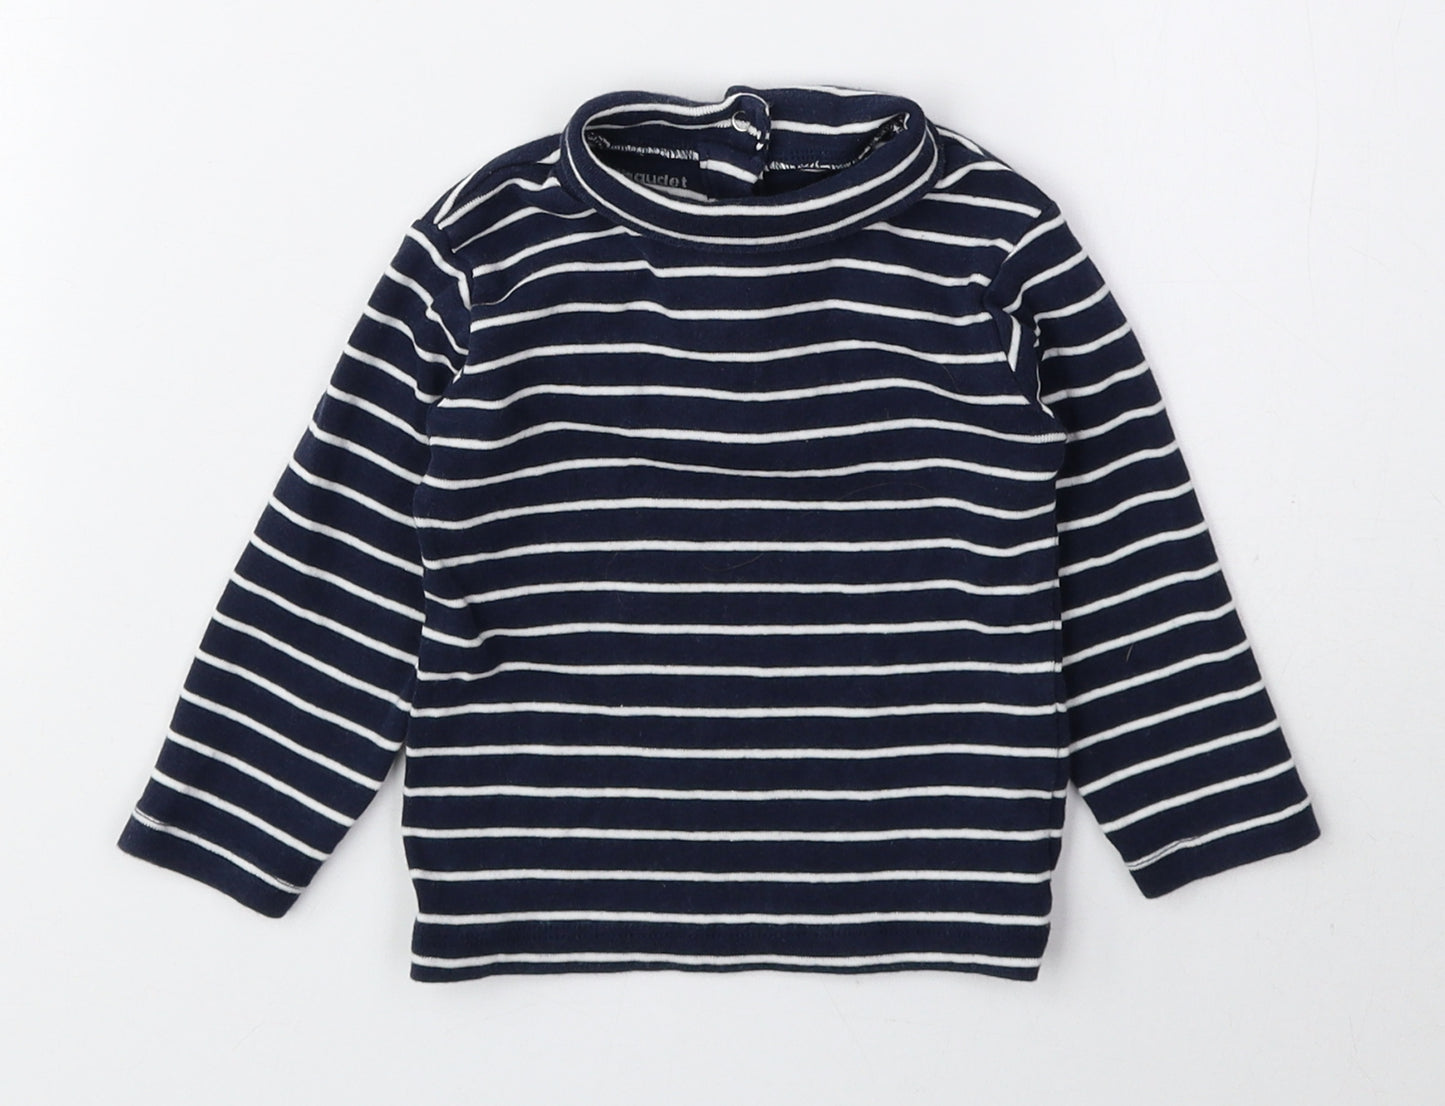 Vertbaudet Blue Striped 100% Cotton Basic T-Shirt Size 6-9 Months Roll Neck Snap